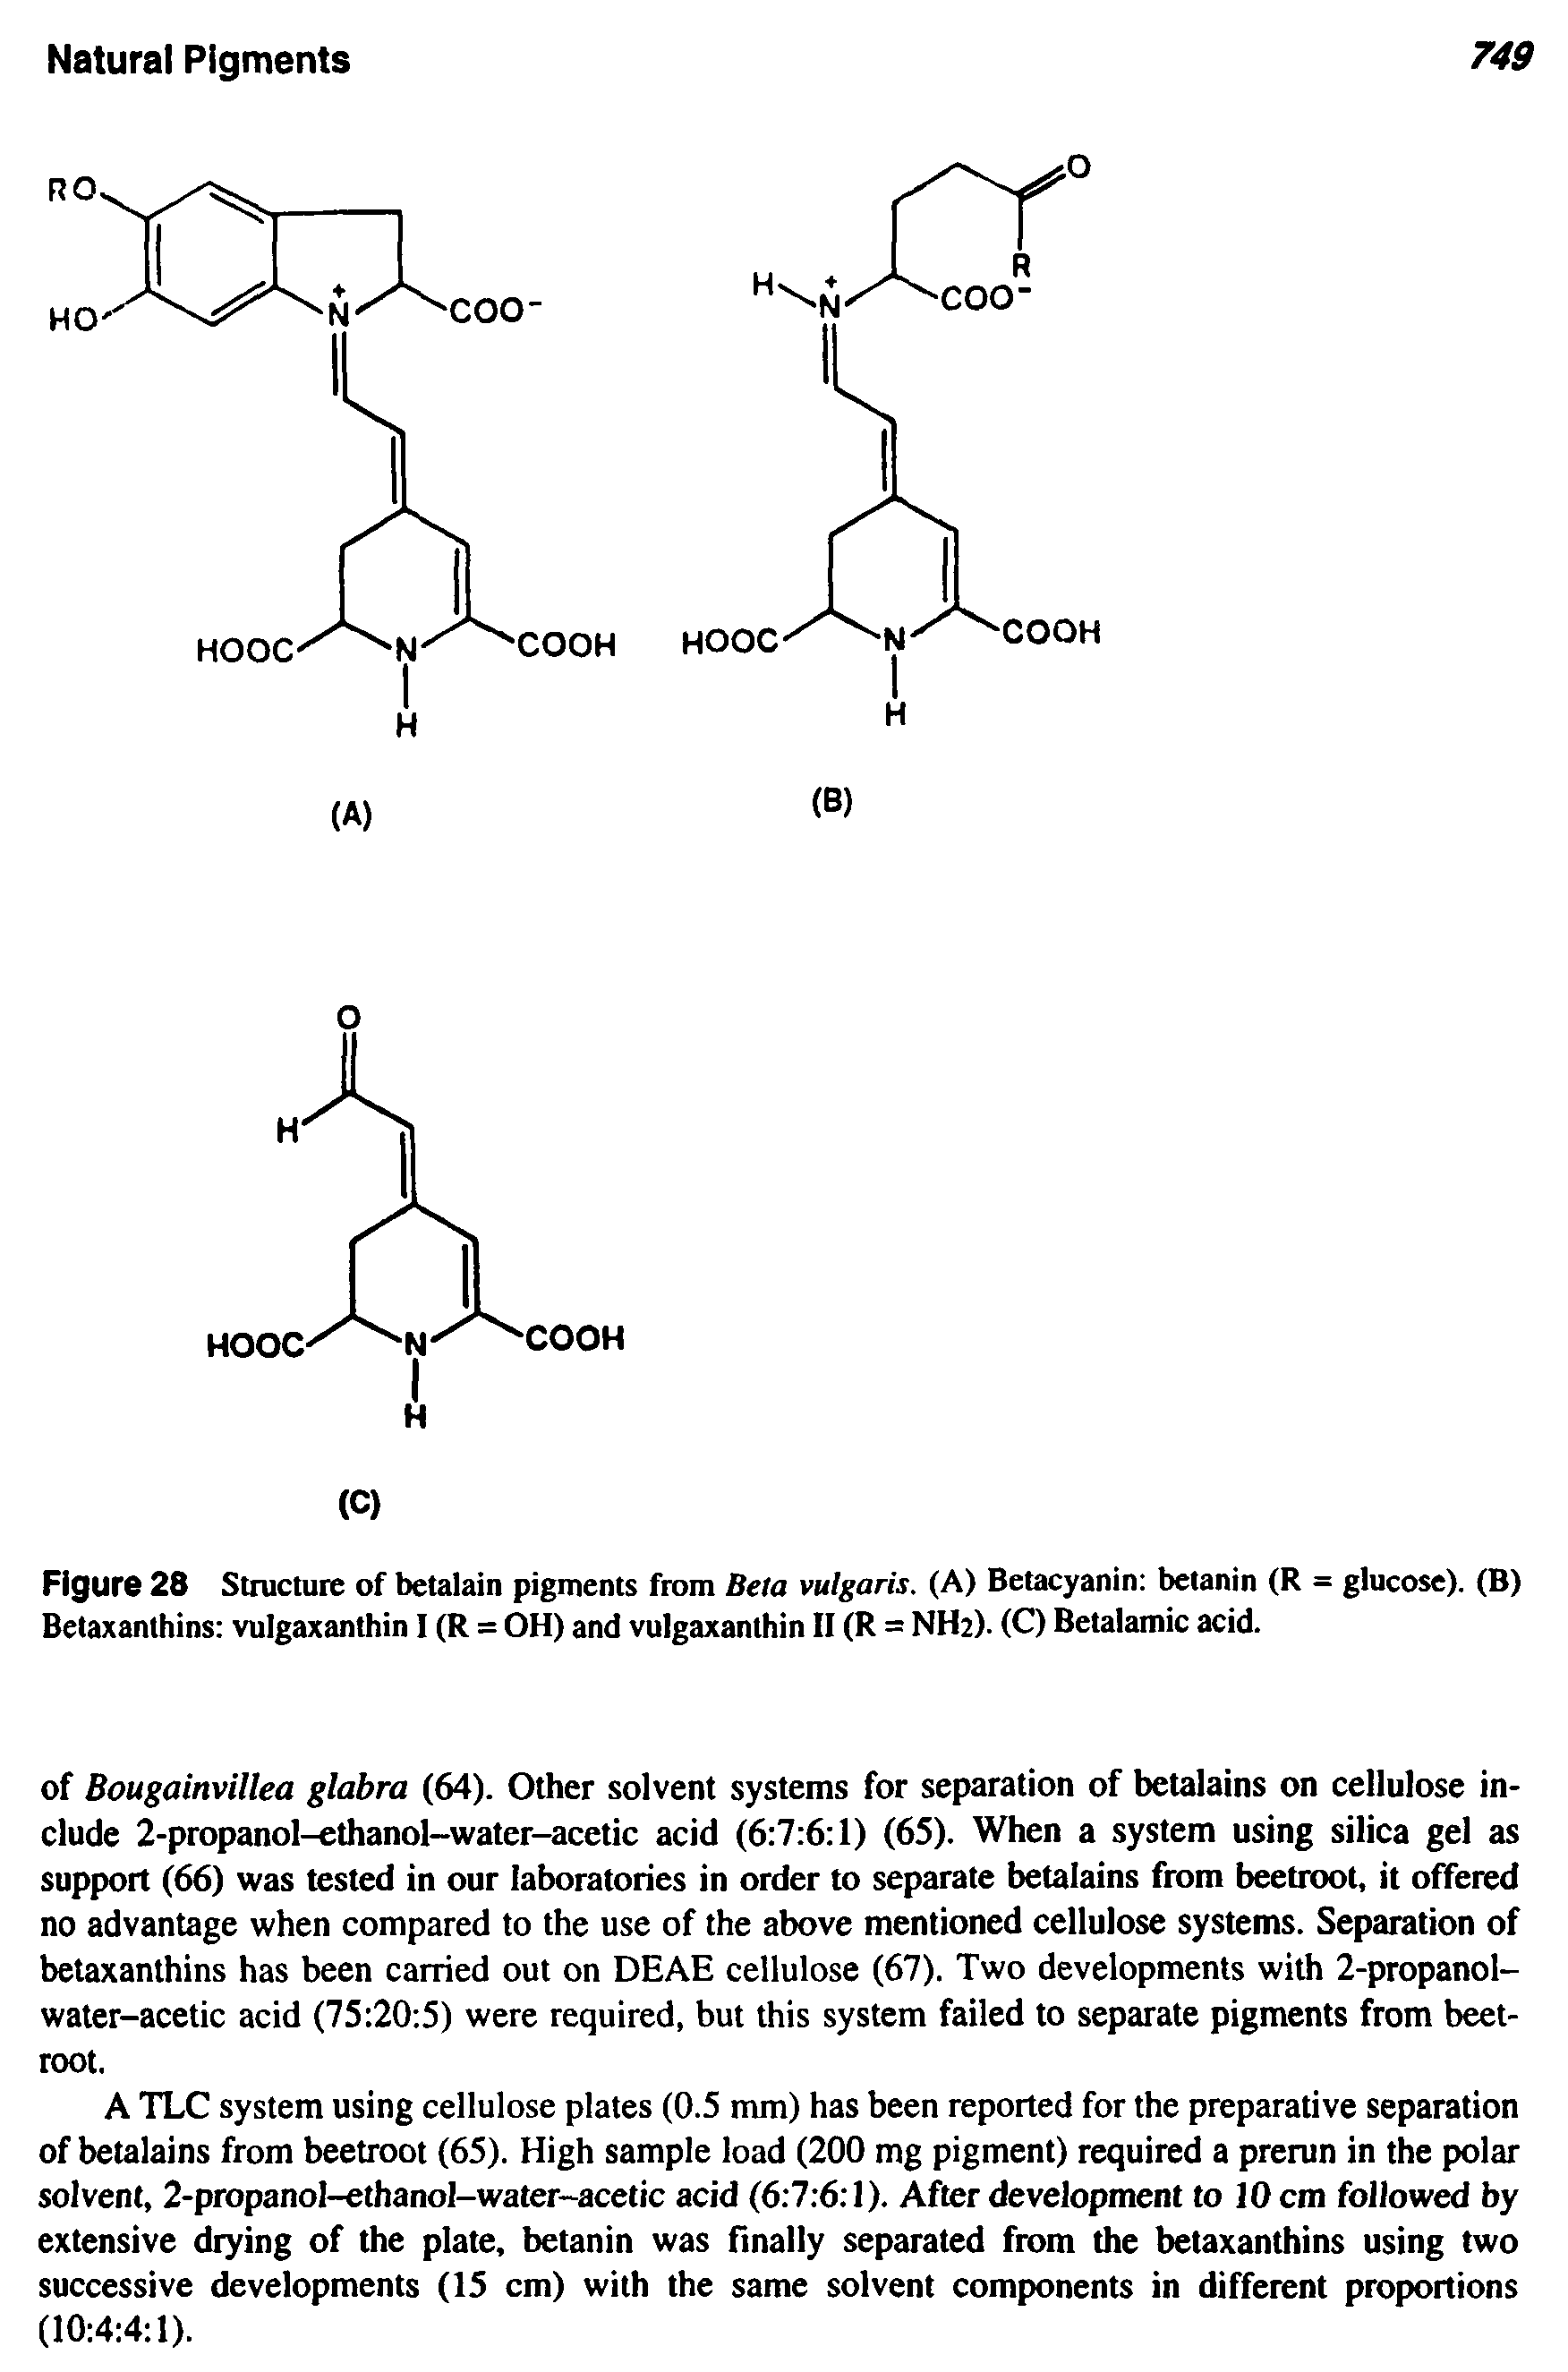 Figure 28 Structure of betalain pigments from Beta vulgaris. (A) Betacyanin betanin (R = glucose). (B) Betaxanthins vulgaxanthin I (R = OH) and vulgaxanthin II (R = NH2)- (C) Betalamic acid.